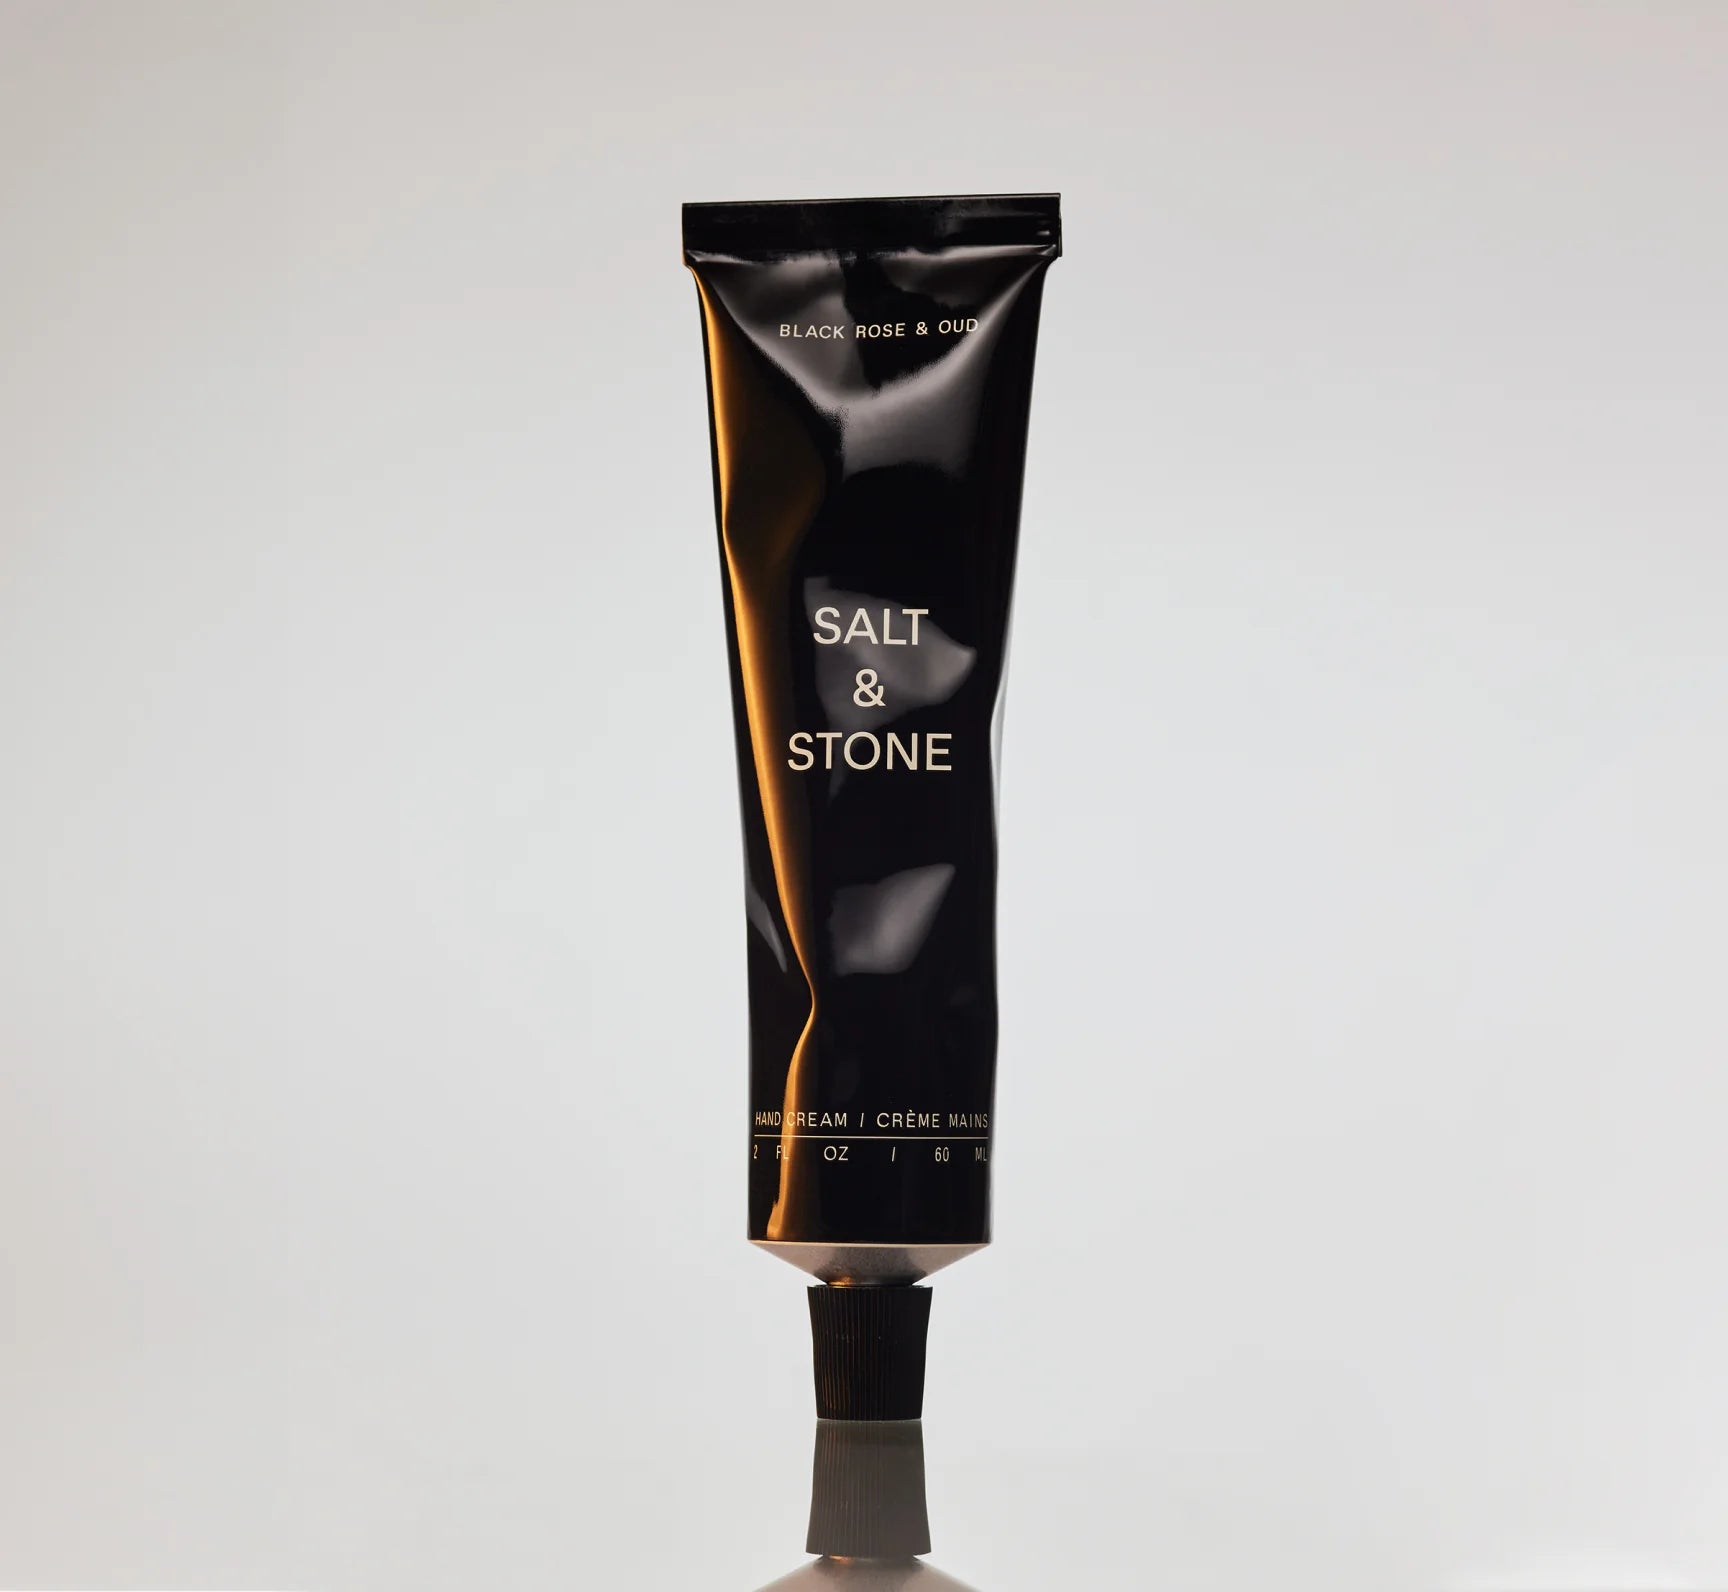 Salt & Stone Hand Cream - Black Rose & Oud